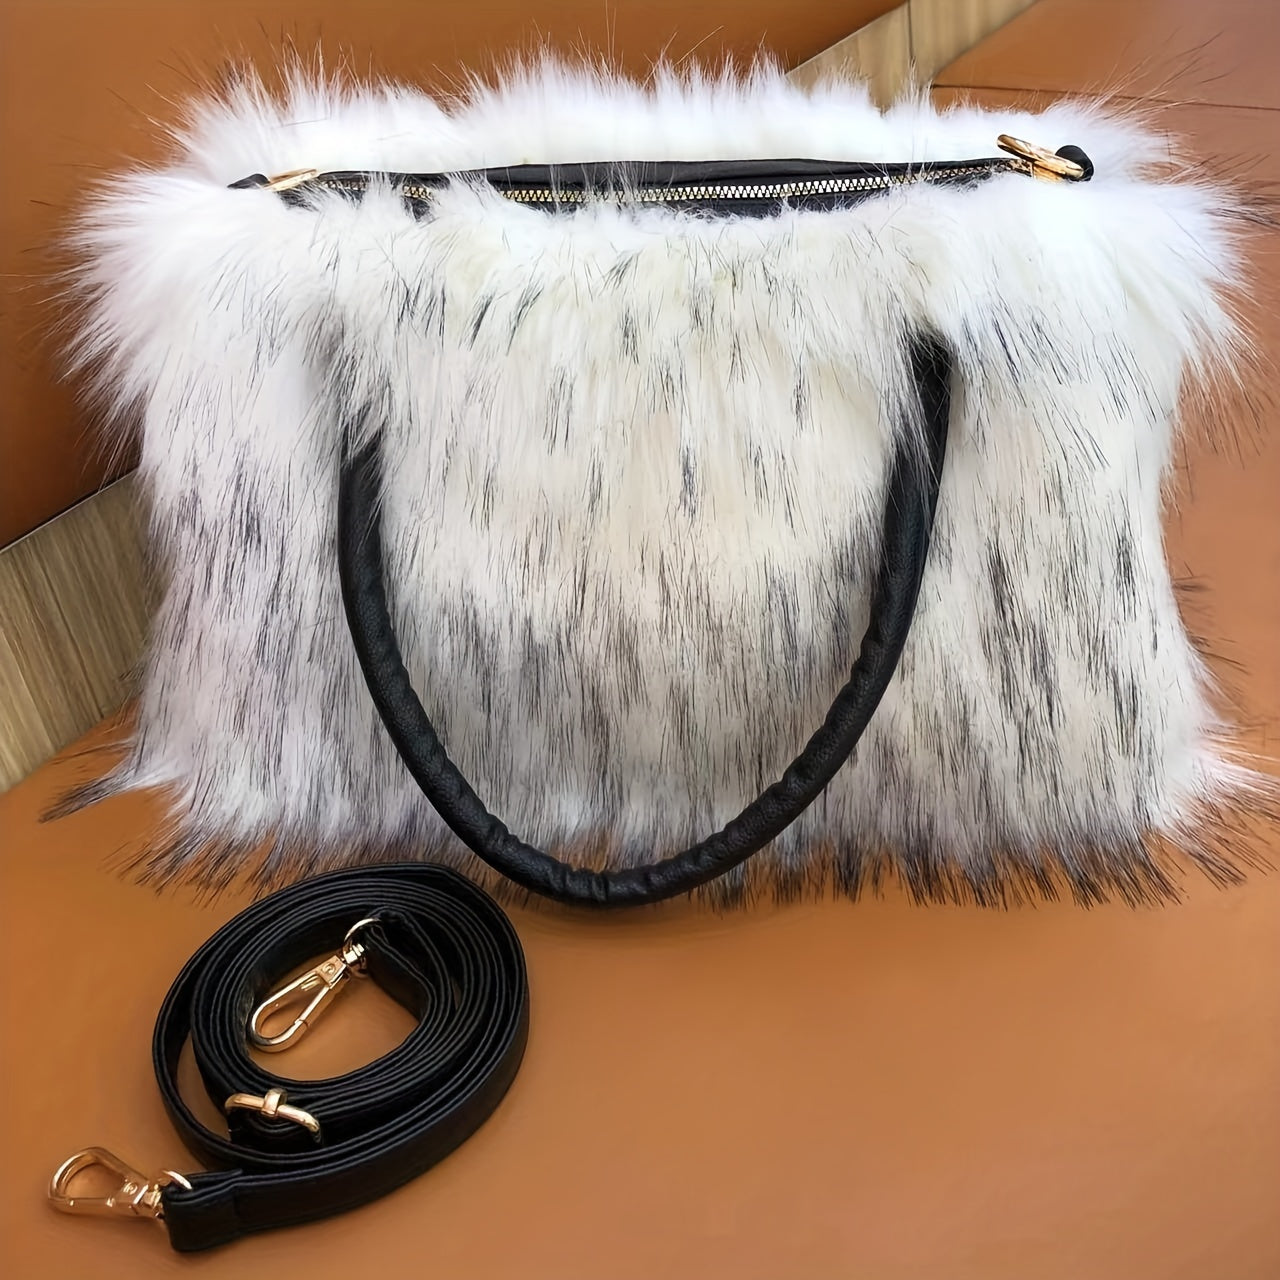 Trendy Faux Fur Tote Bag - Y2K Plush Fluffy Shoulder Handbag for Street Wear